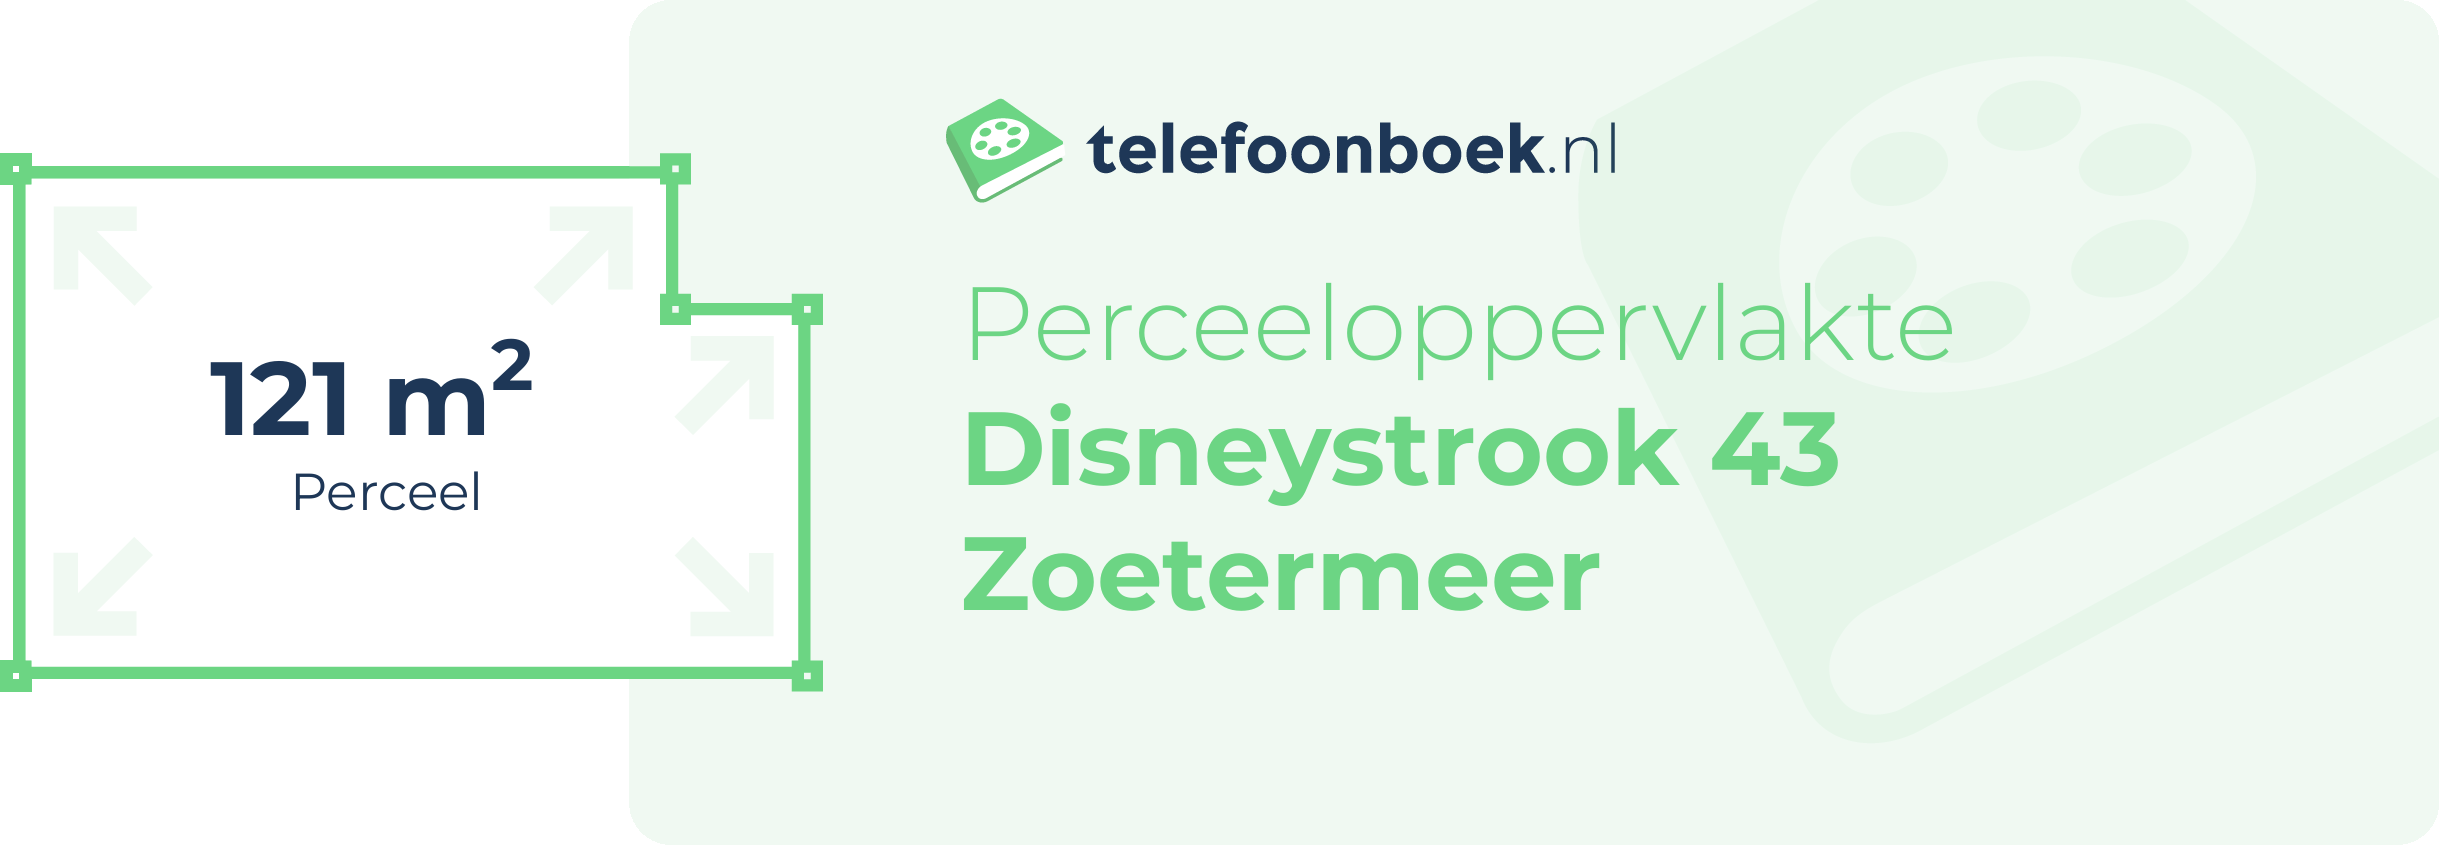 Perceeloppervlakte Disneystrook 43 Zoetermeer